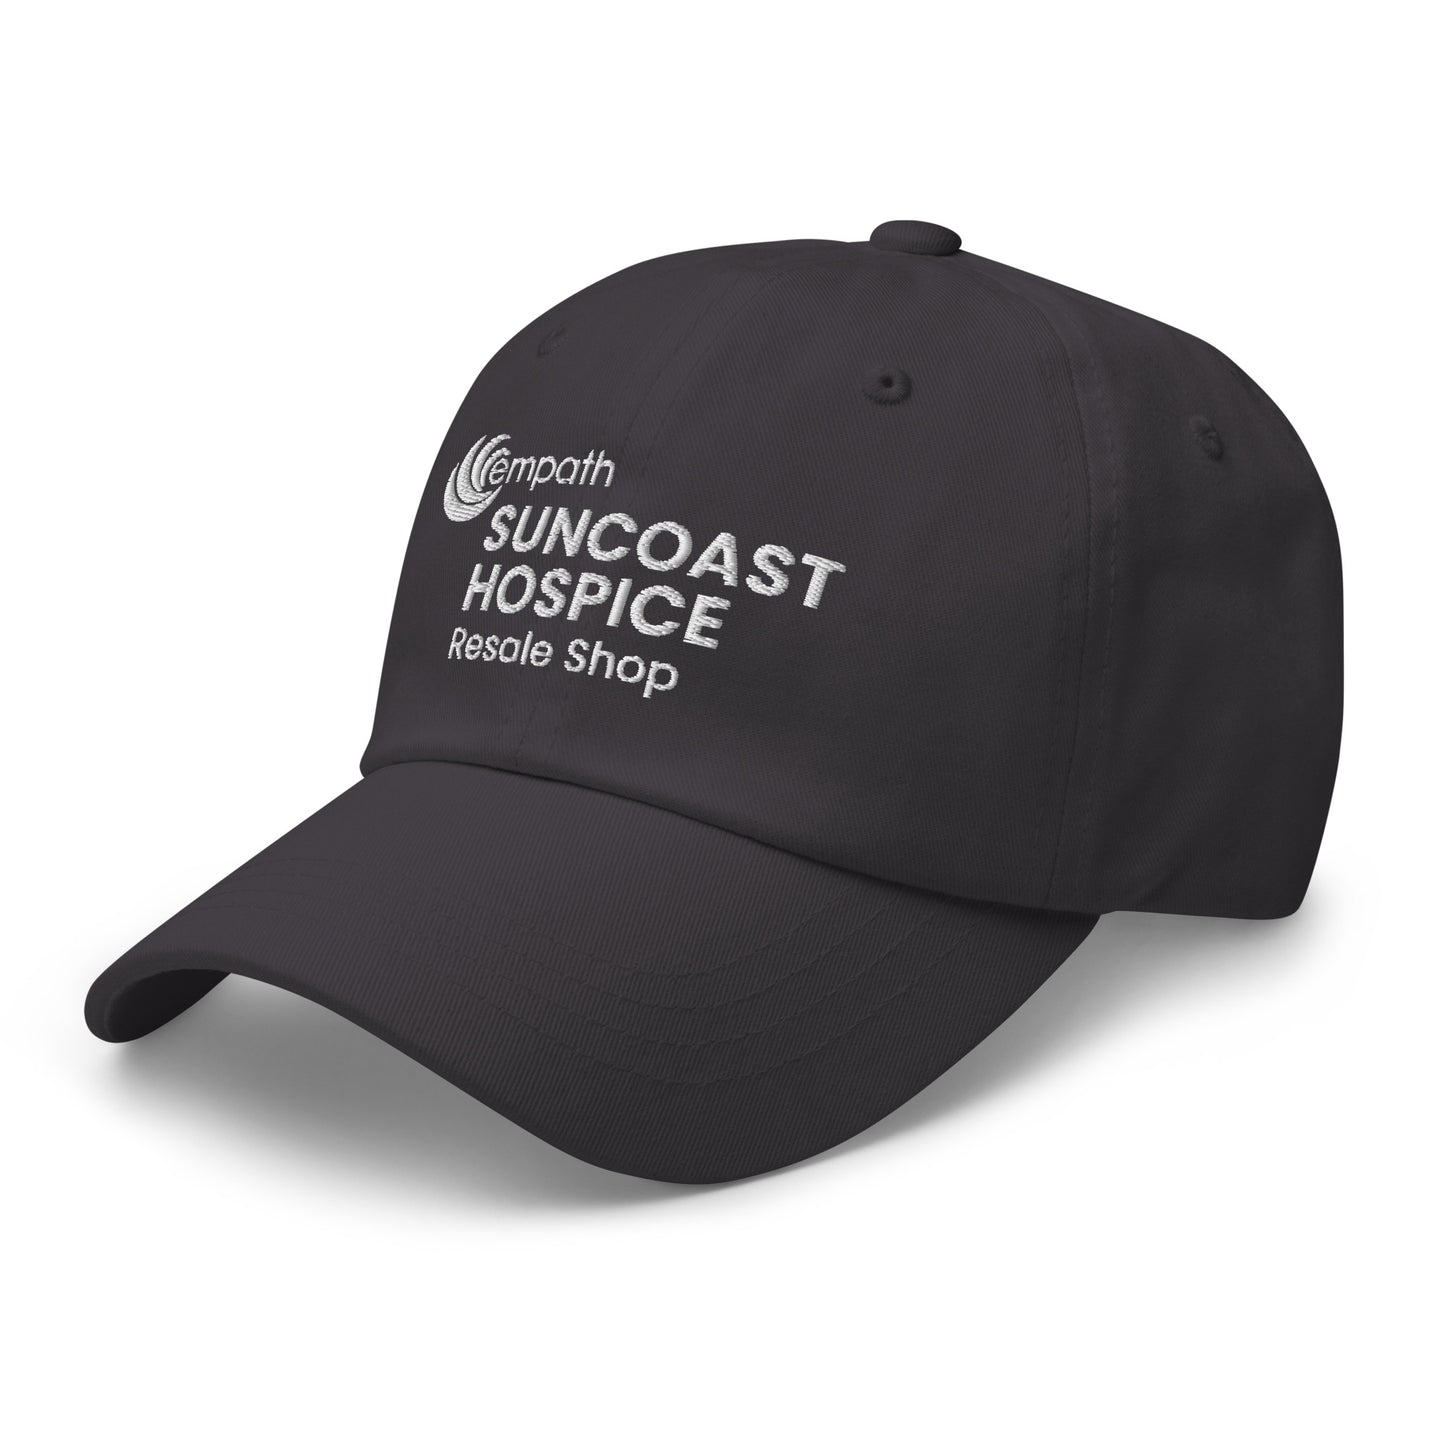 Classic Dad hat - Suncoast Hospice Resale Shop